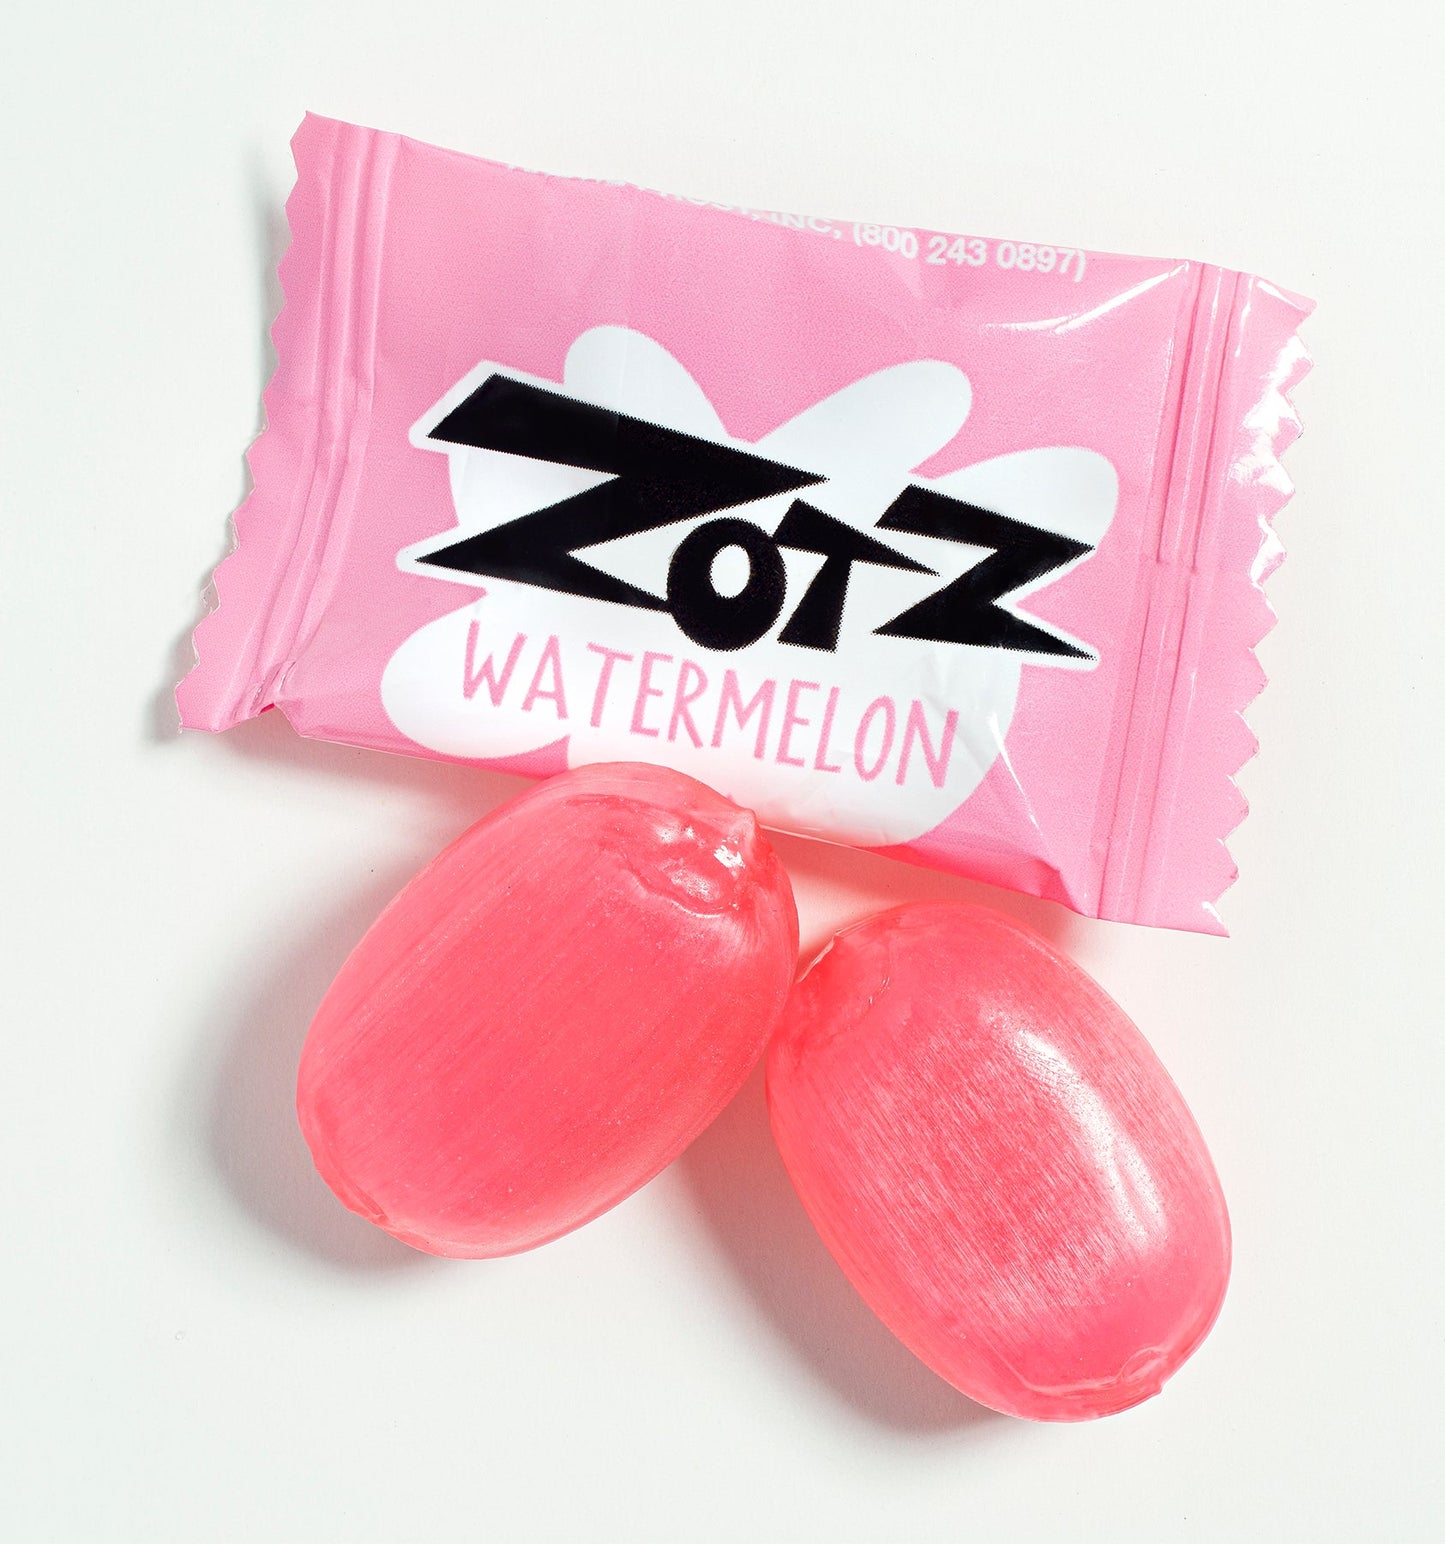 ZOTZ Watermelon,  CASE of 12/46 count bags